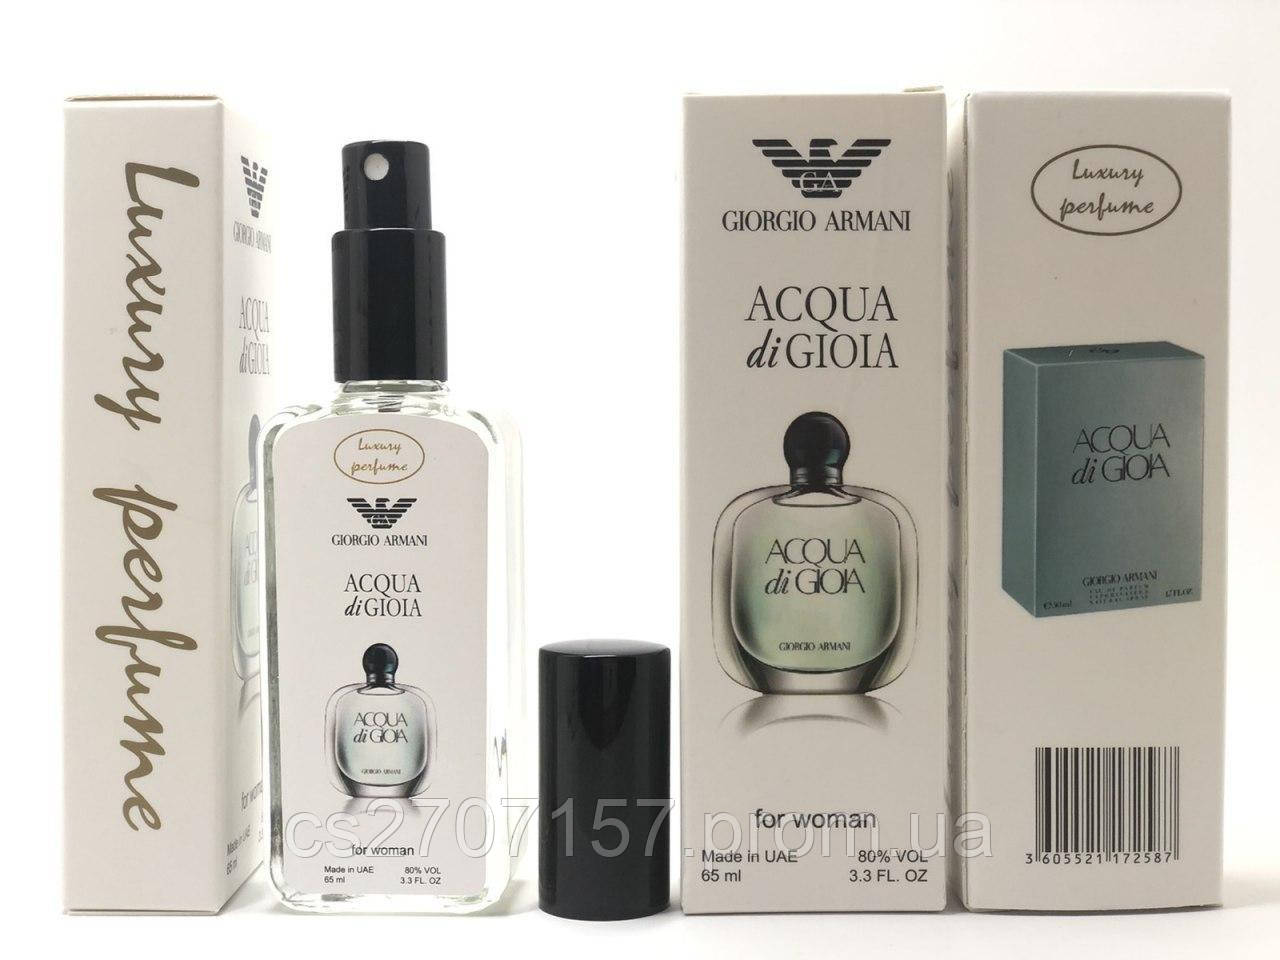 Жіночий тестер Giorgio Armani Acqua Di Gioia Luxury Perfume (Аква Ді Джиола) 65 мл